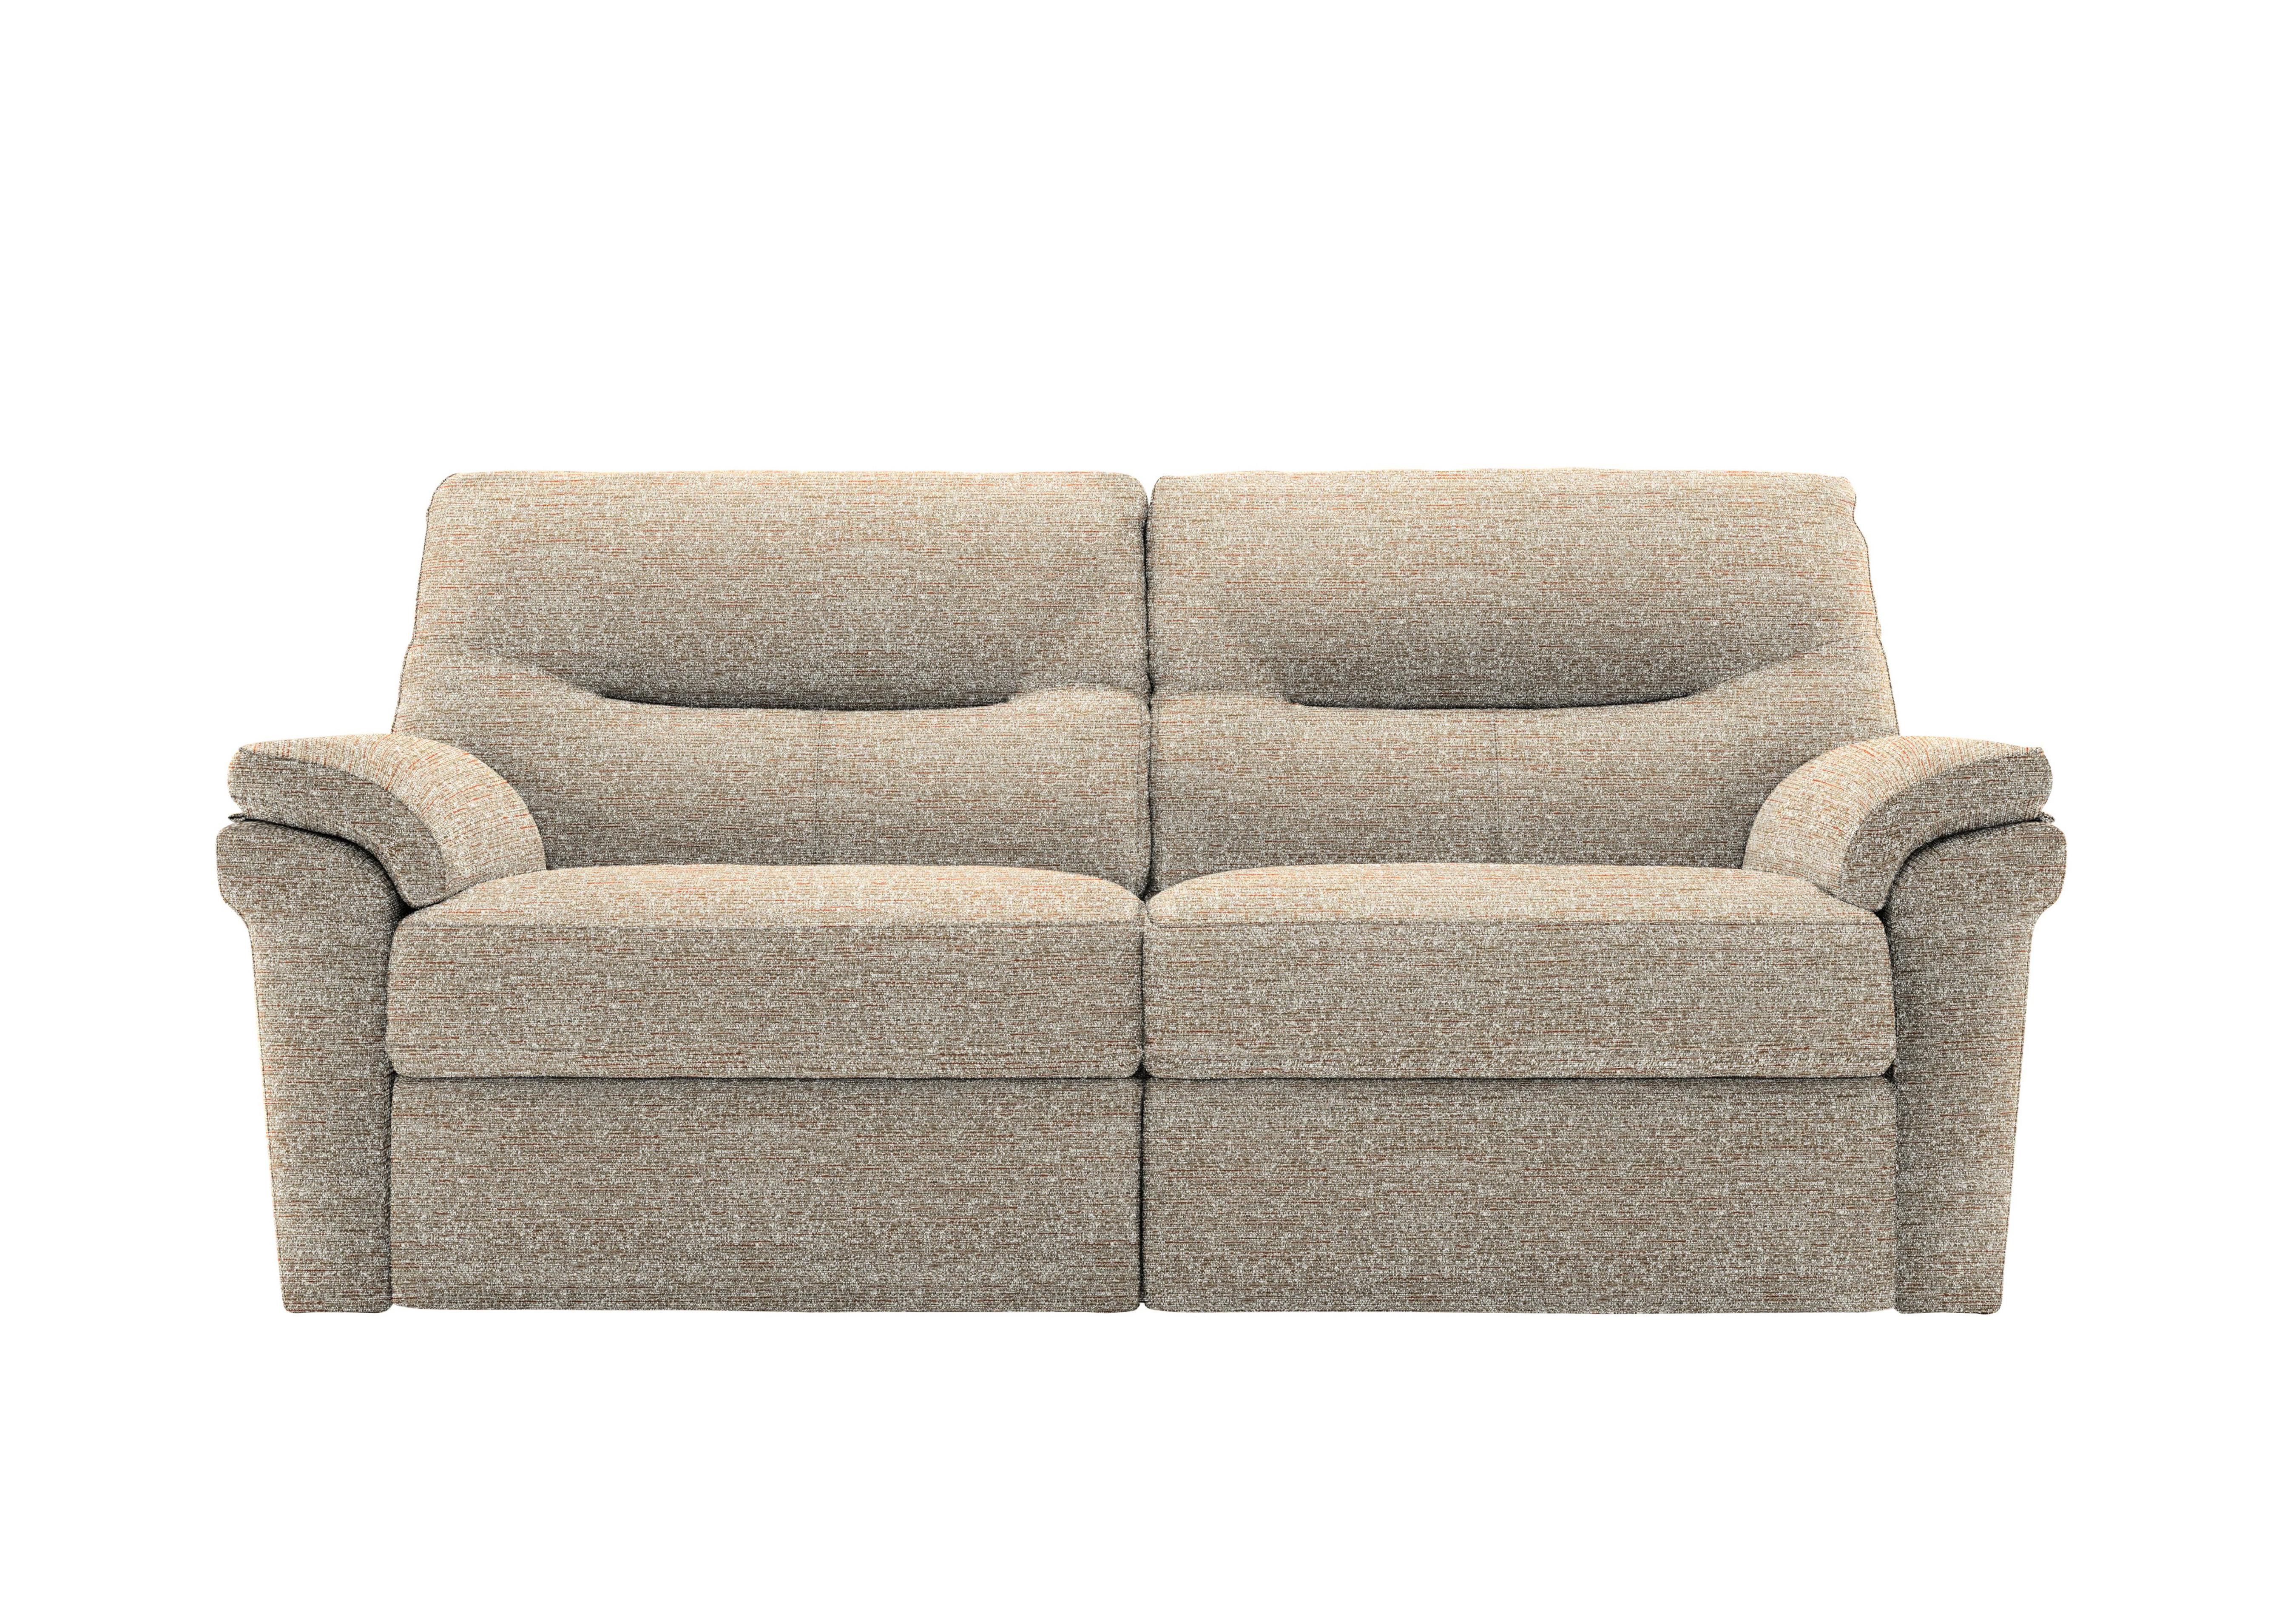 Seattle 3 Seater Fabric Sofa in C030 Kampala Beige on Furniture Village